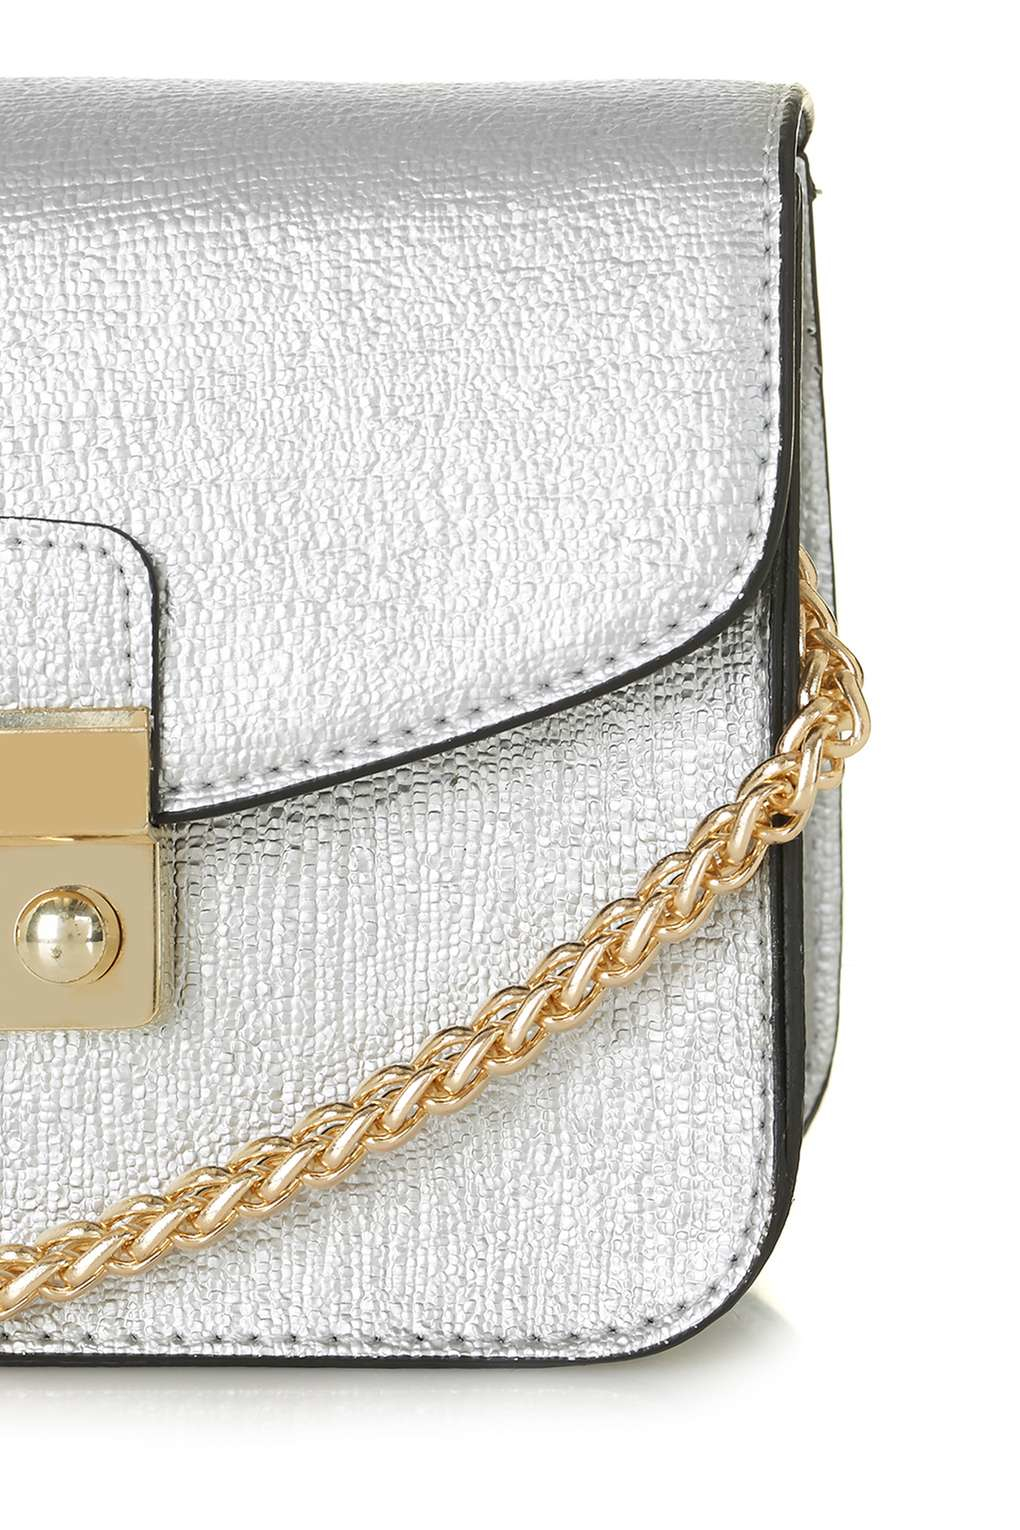 TOPSHOP Mini Chain Crossbody Bag in Silver (Metallic) - Lyst